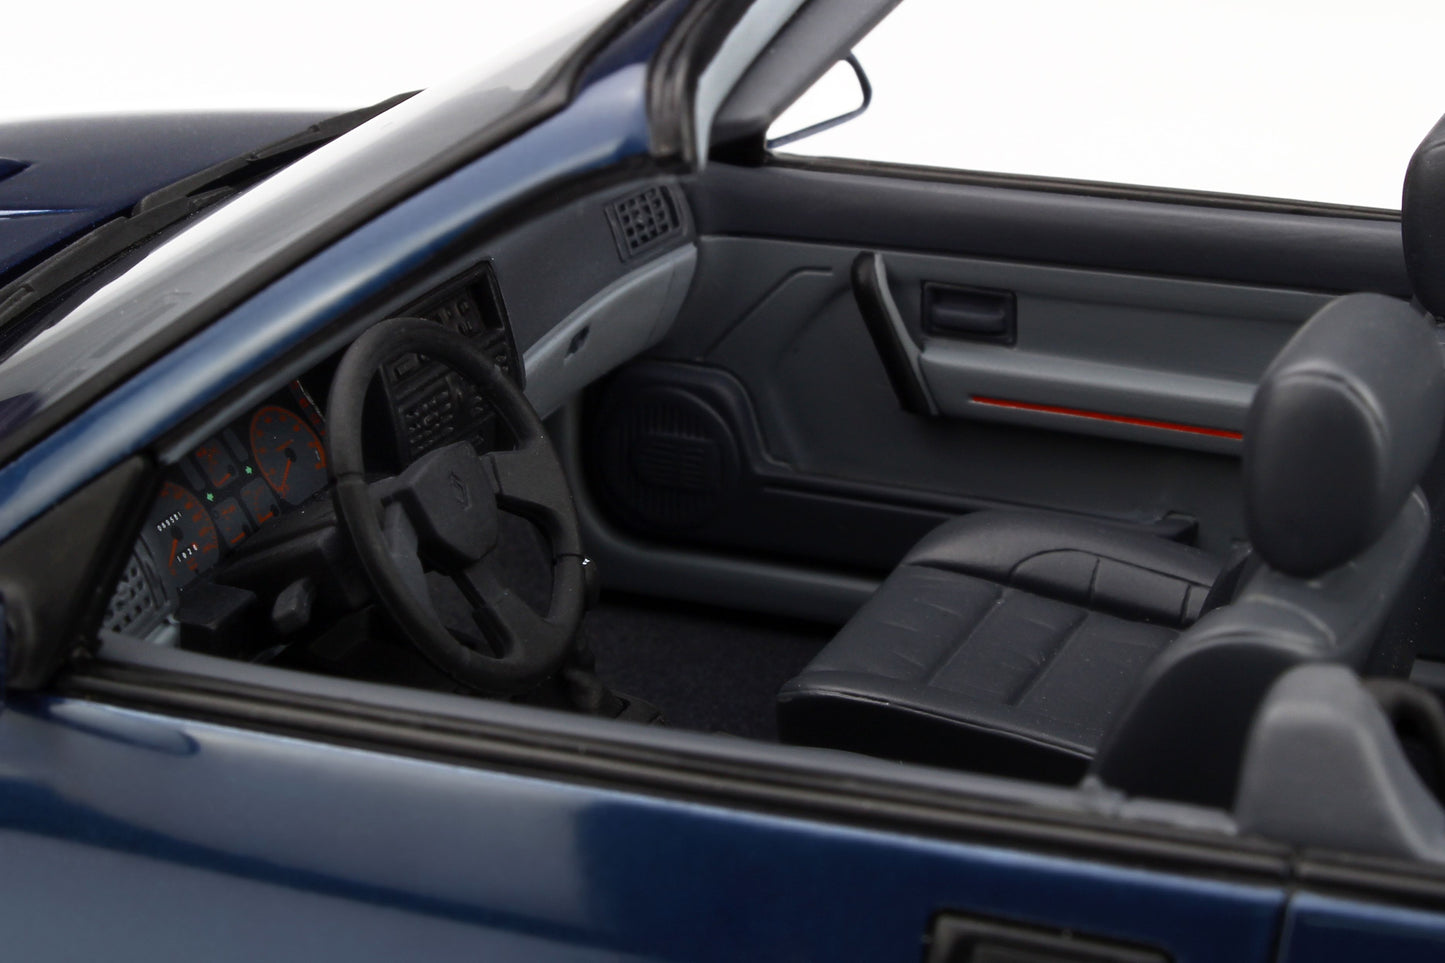 OTTO 1:18 Renault 19 16S Cabriolet Blue sport 449 Resin Model Car OT673